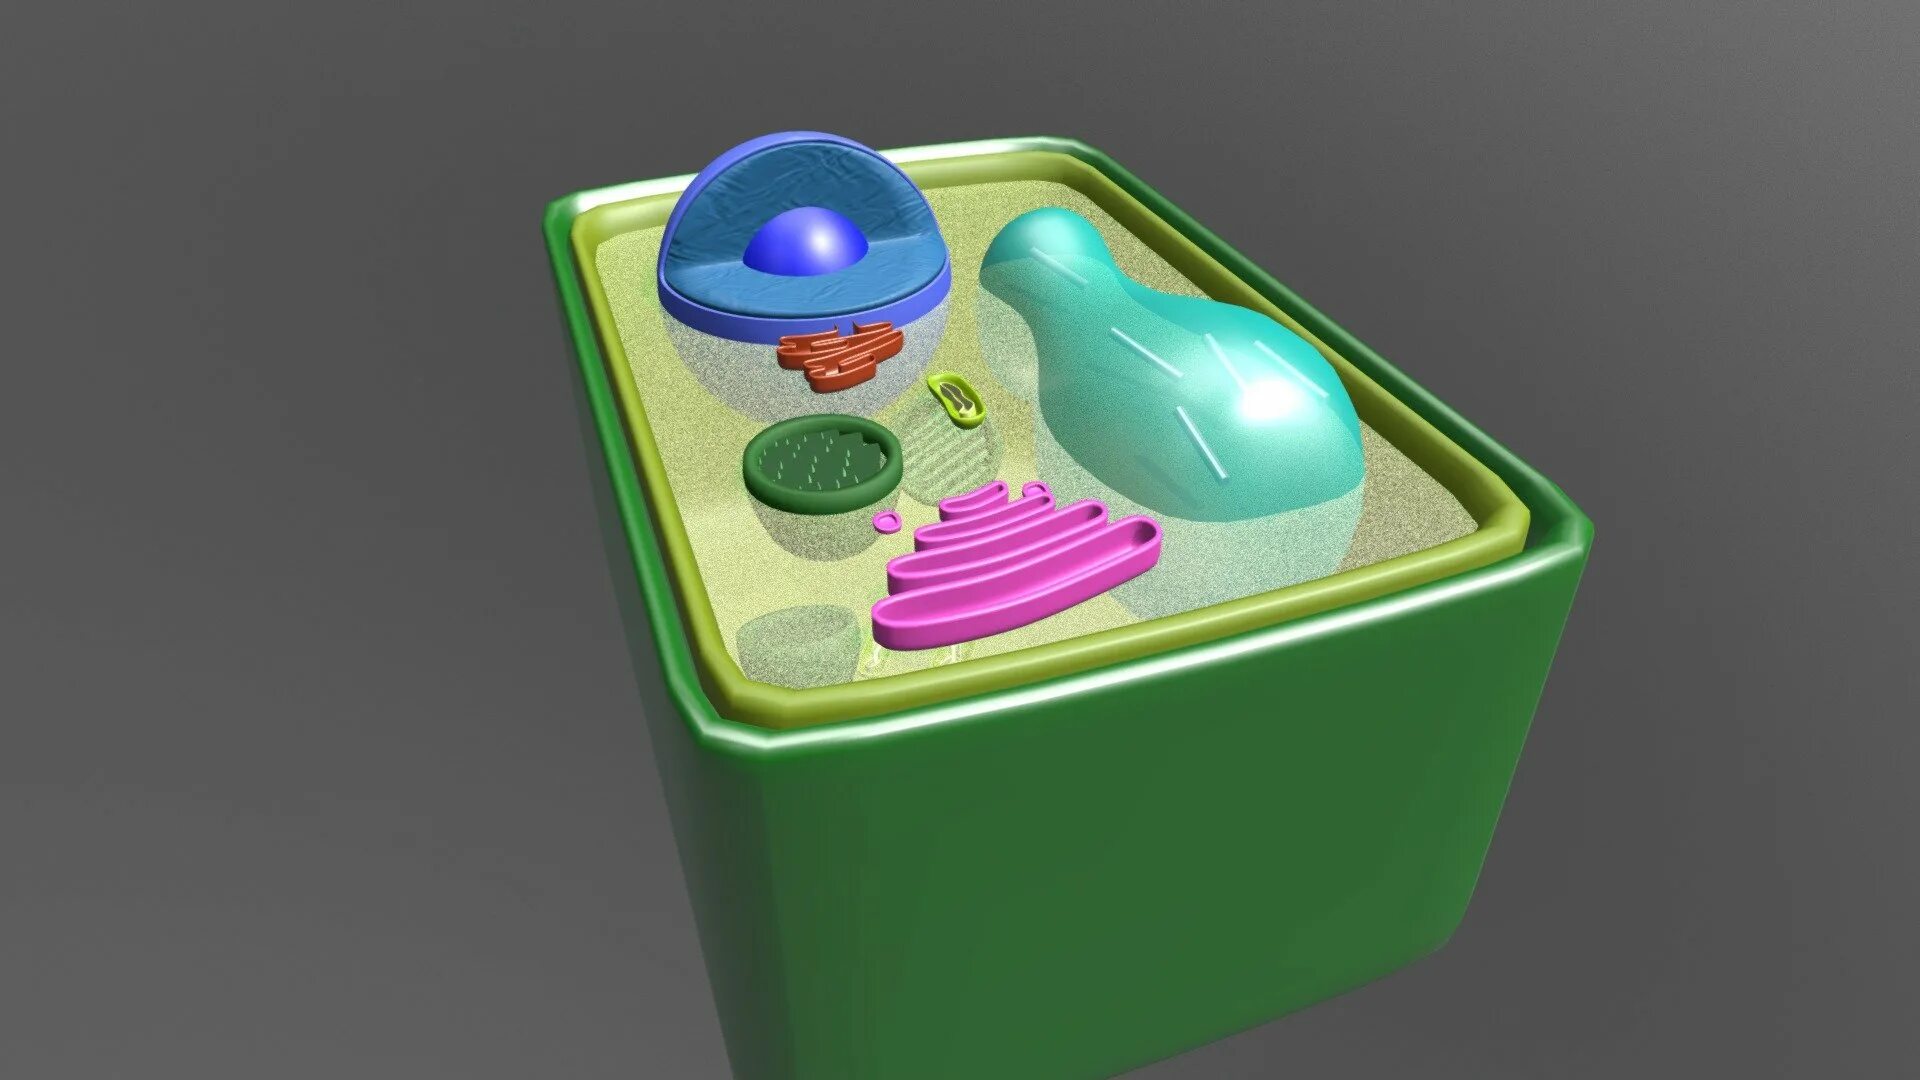 Plant Cell 3d. 3д модель клетки. 3д модель растительной клетки. Модель клетки растения. Искусственная клетка 3